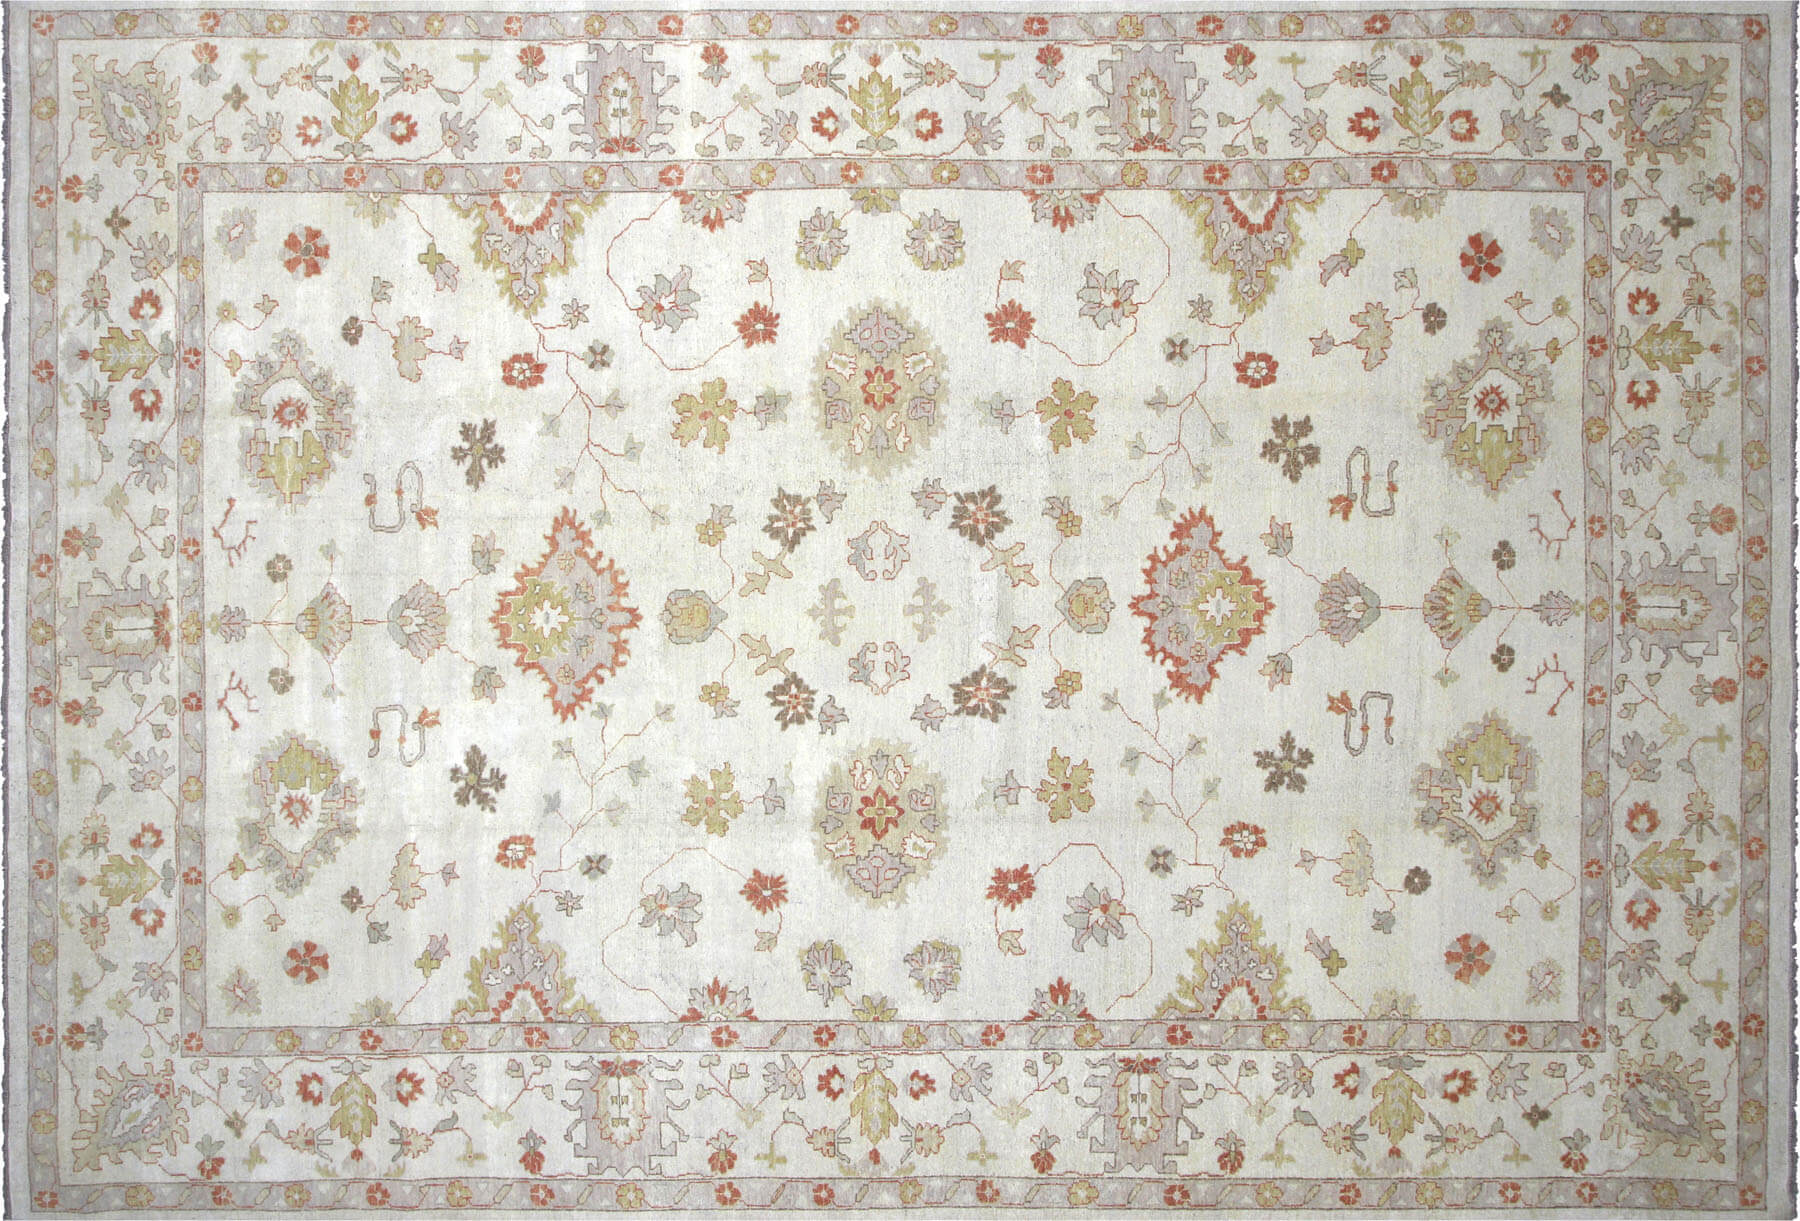 Recently Woven Turkish Oushak Carpet - 12' x 17'7"